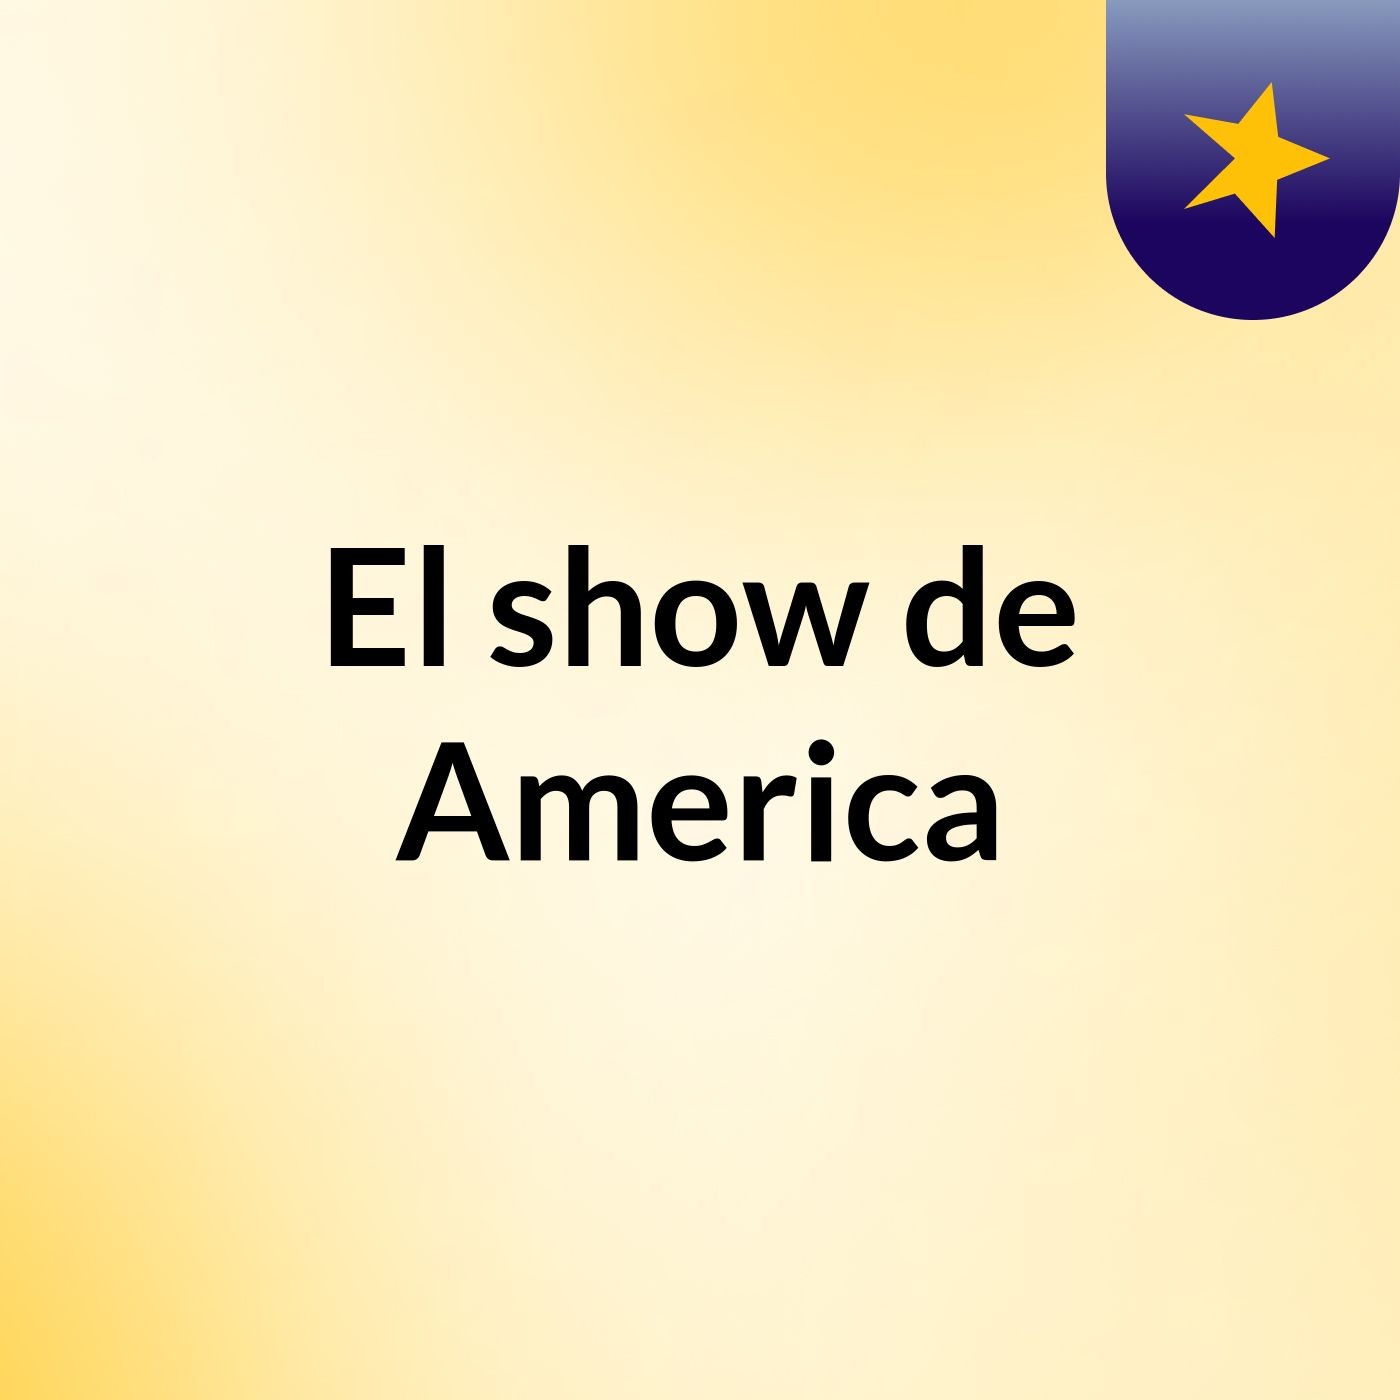 El show de America